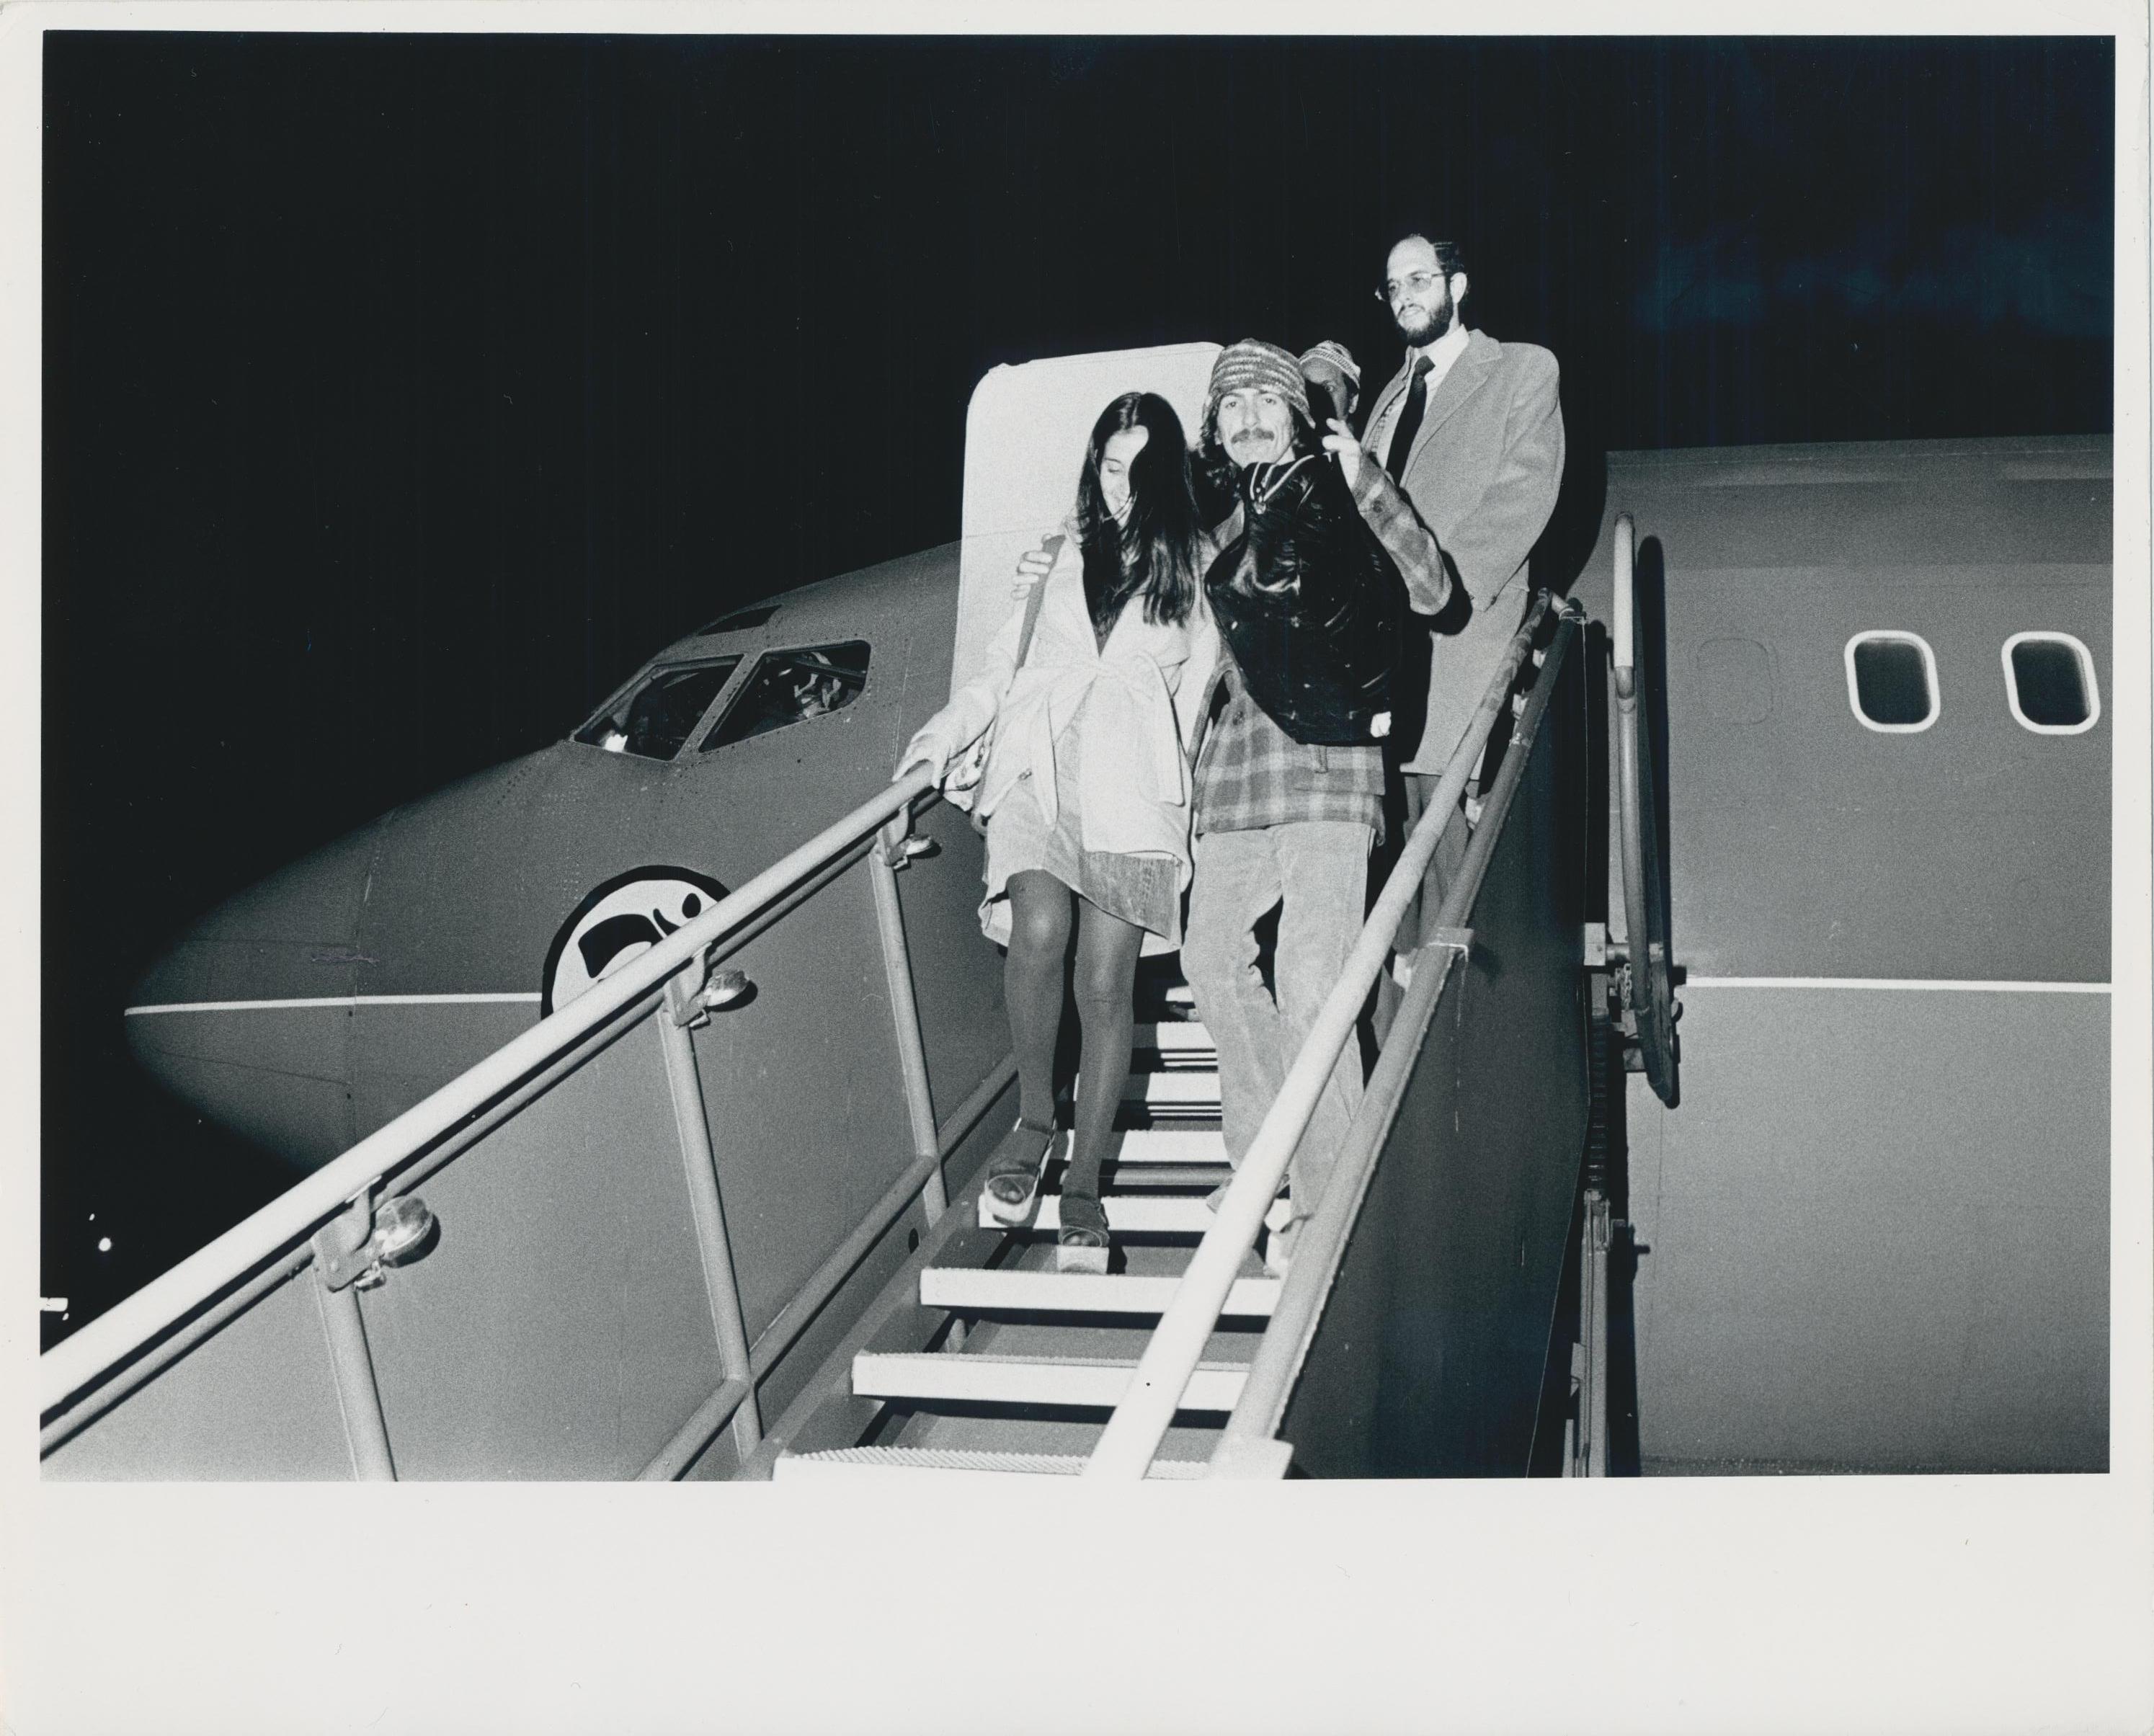 Henry Grossman Portrait Photograph - Geroge Harrison, Plane, Black and White Photography, 1970s, 20, 8 x 25, 3 cm